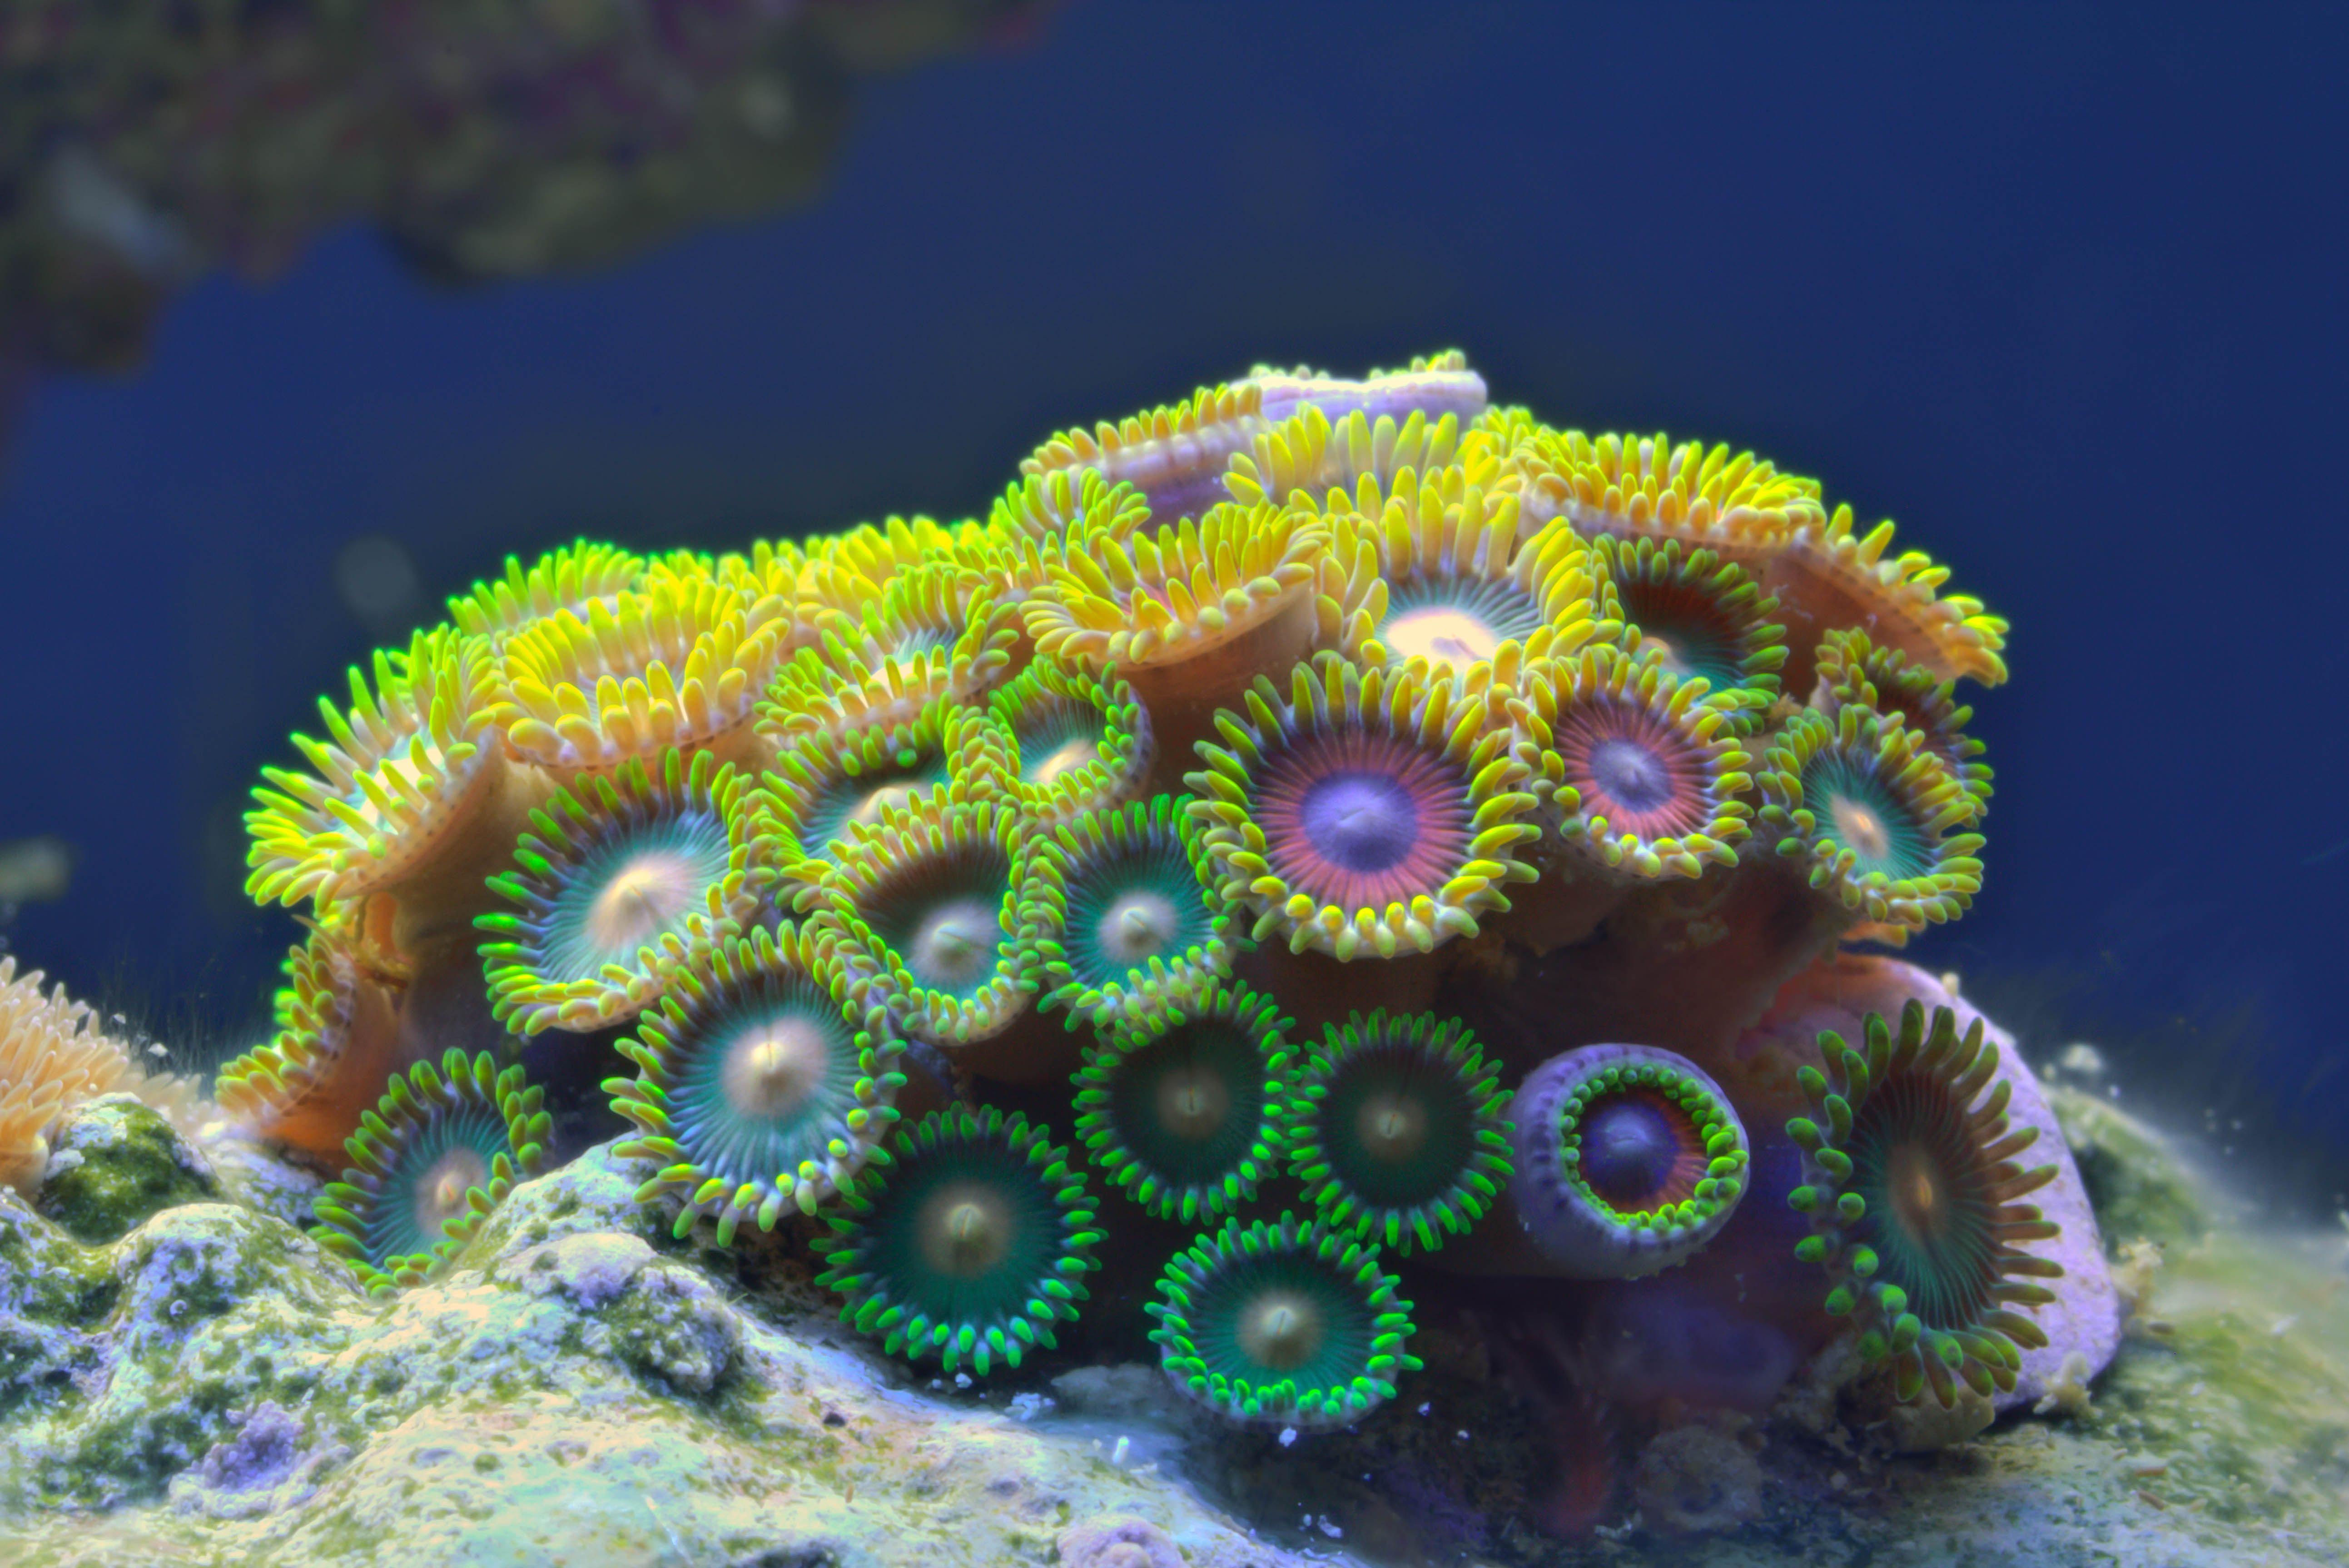 Coral bear. Шестилучевые коралловые полипы. Зоантусы могикан. Коралловый полип Зоантарии. Агава зоантусы.